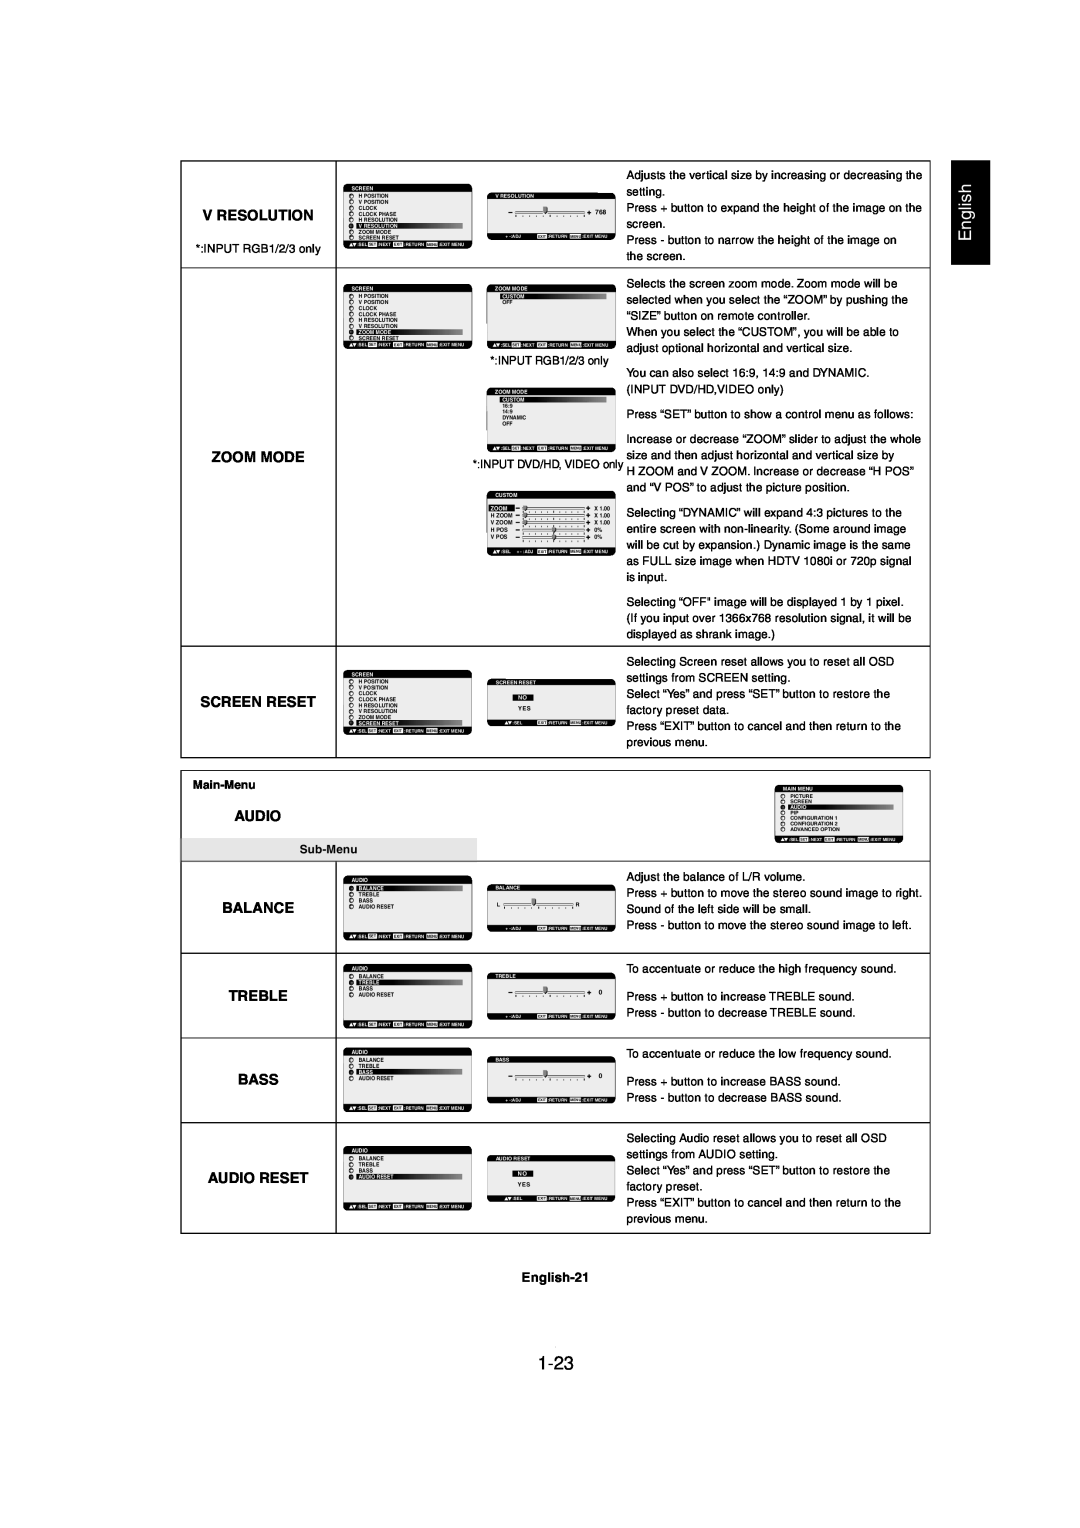 Mitsubishi Electronics MDT321S user manual 1-23, V Resolution, Balance, Treble, Bass, Audio Reset, English 